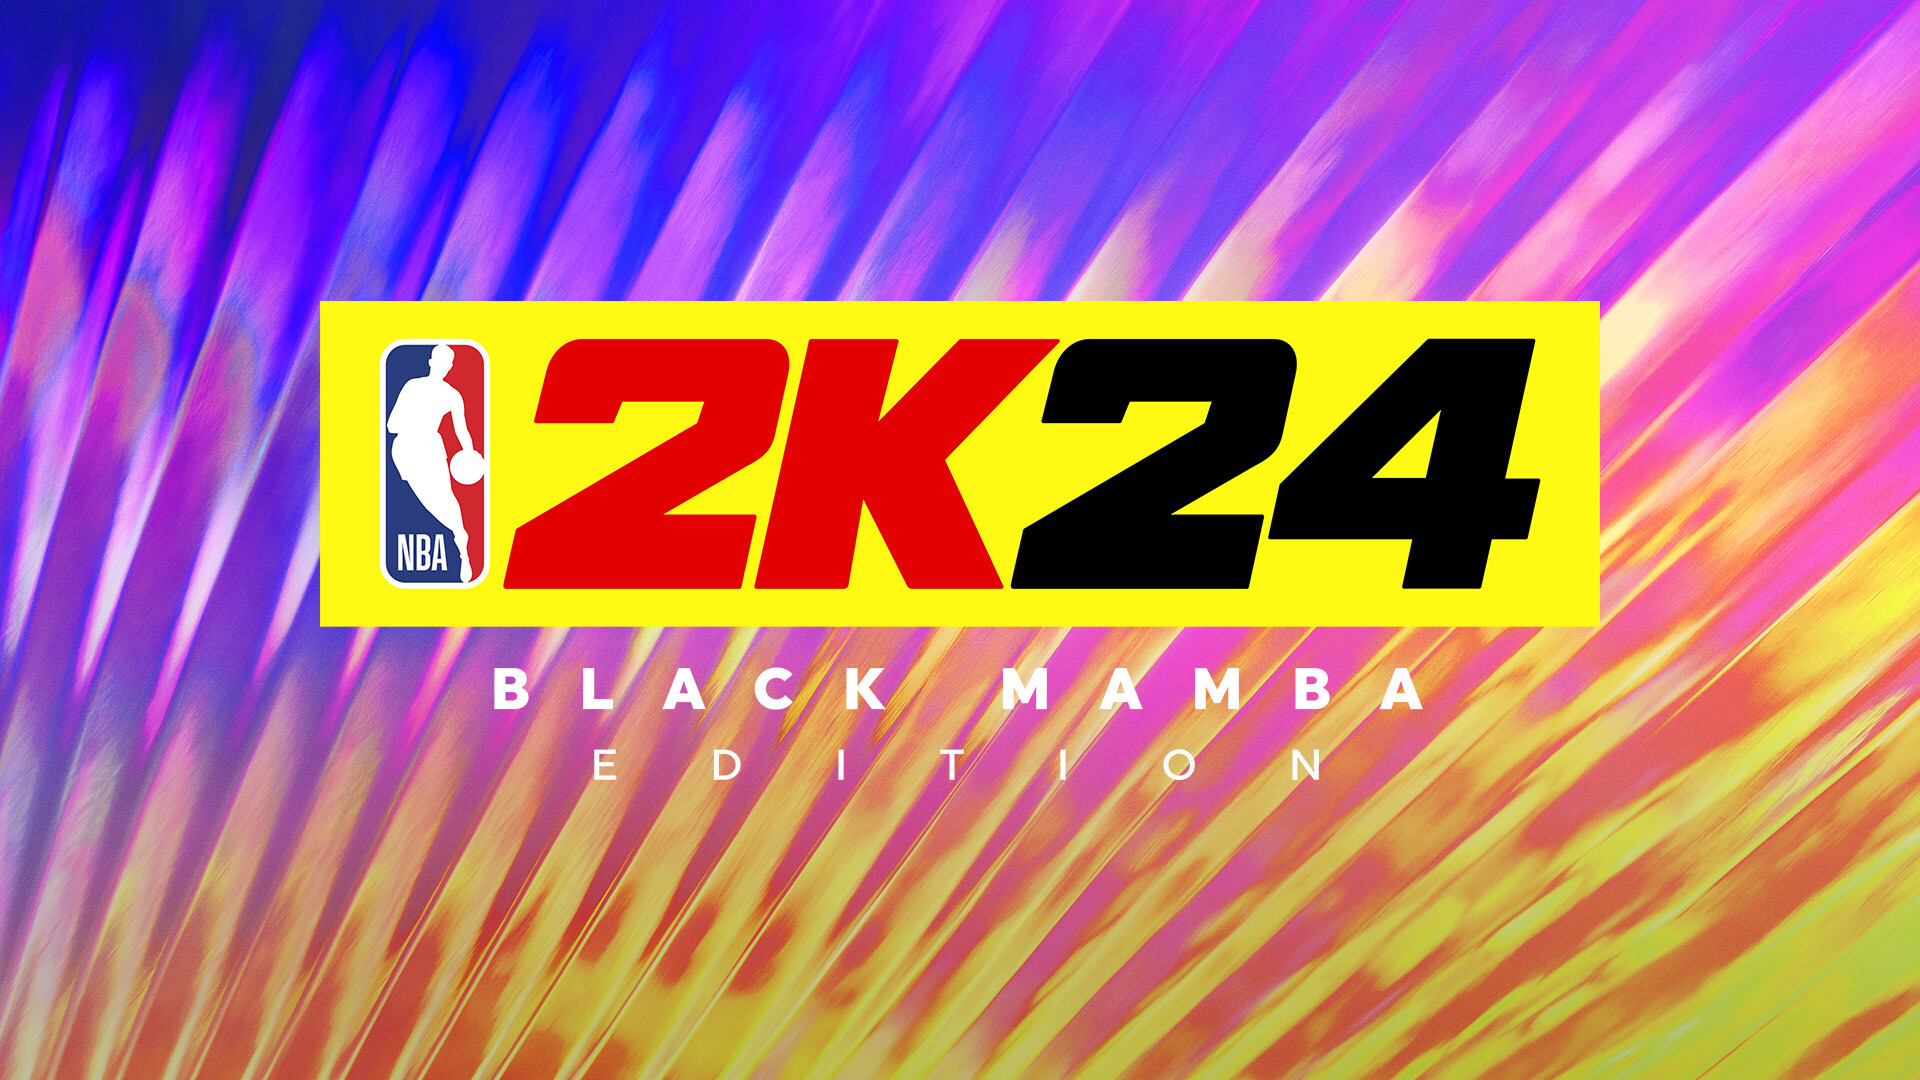 NBA 2K24 Kobe Bryant Edition Steam CD Key